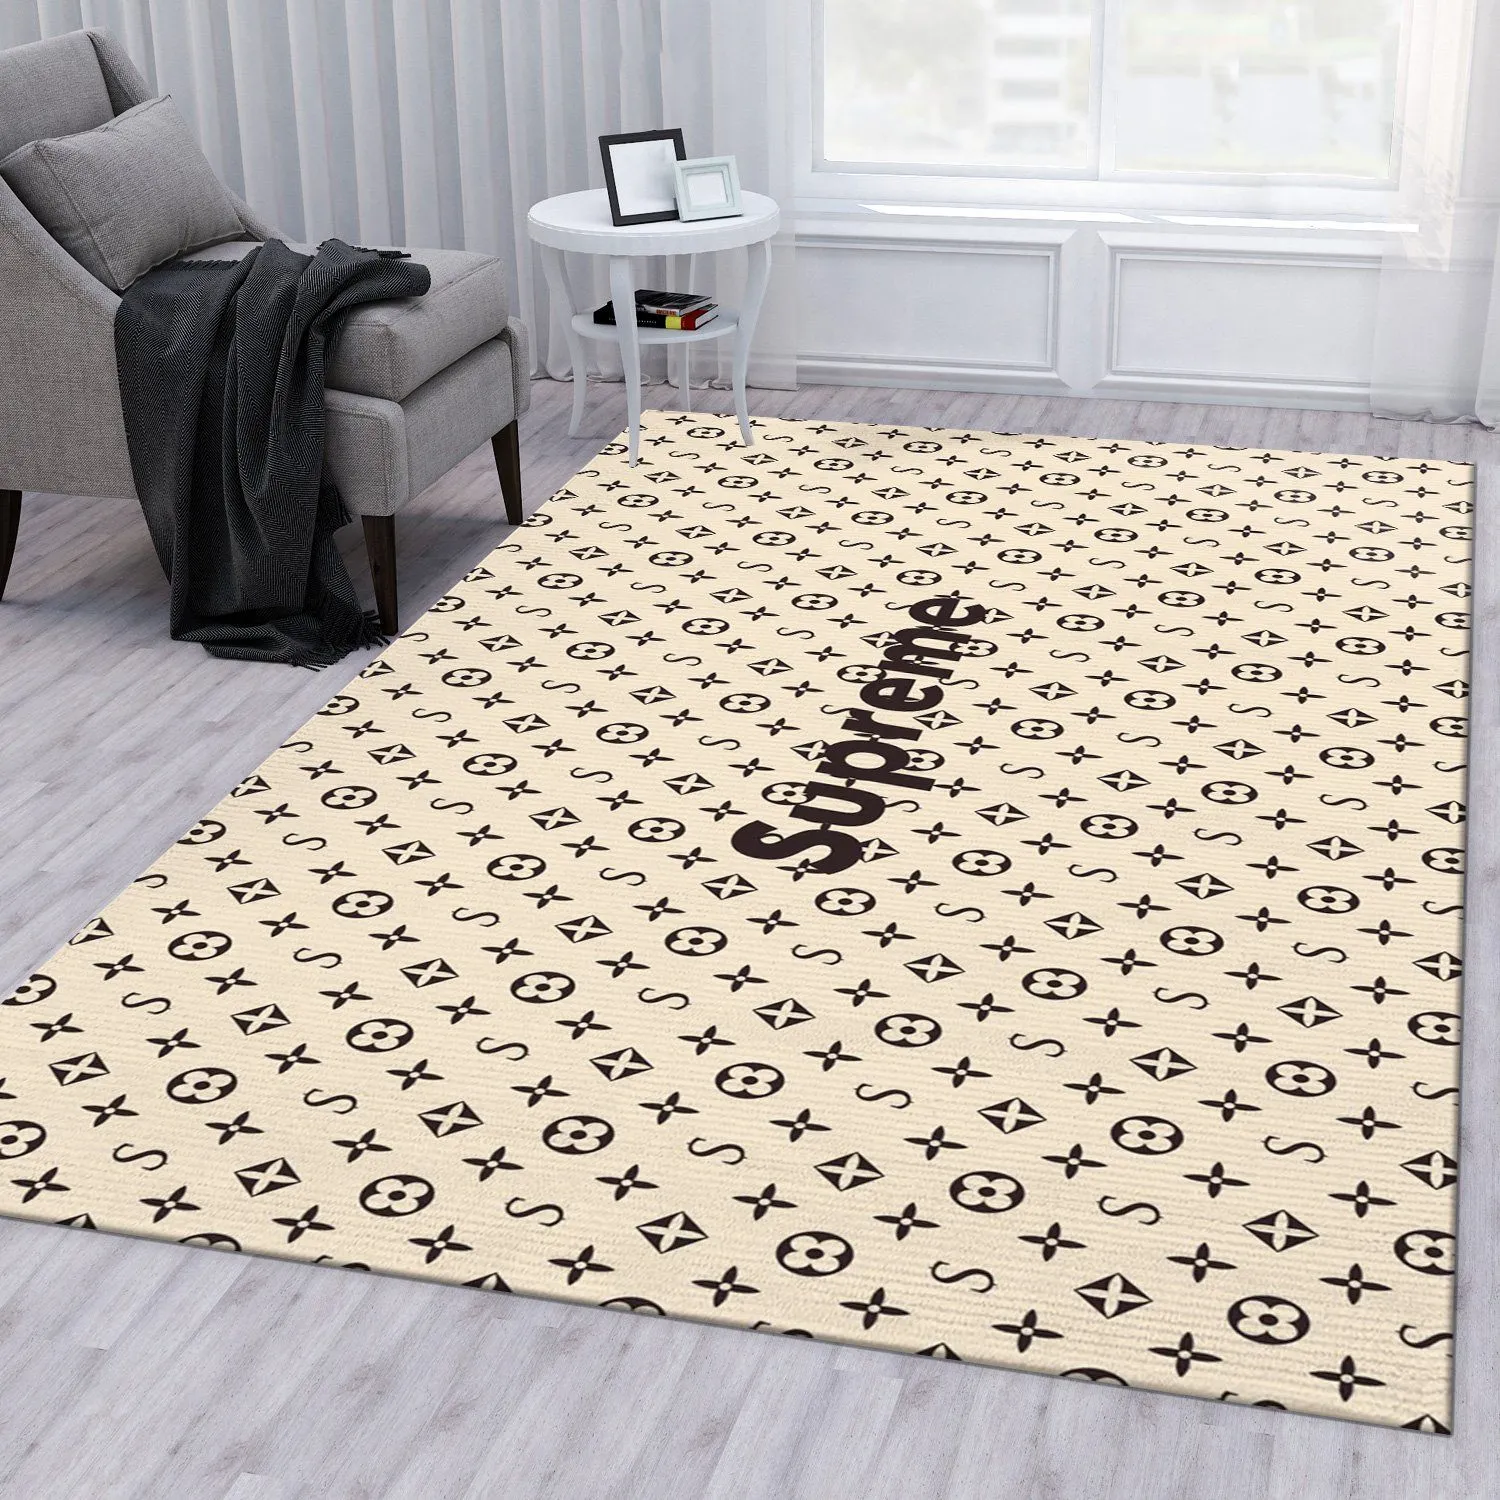 Supereme x louis vuitton Rectangle Rug Fashion Brand Door Mat Home Decor Area Carpet Luxury